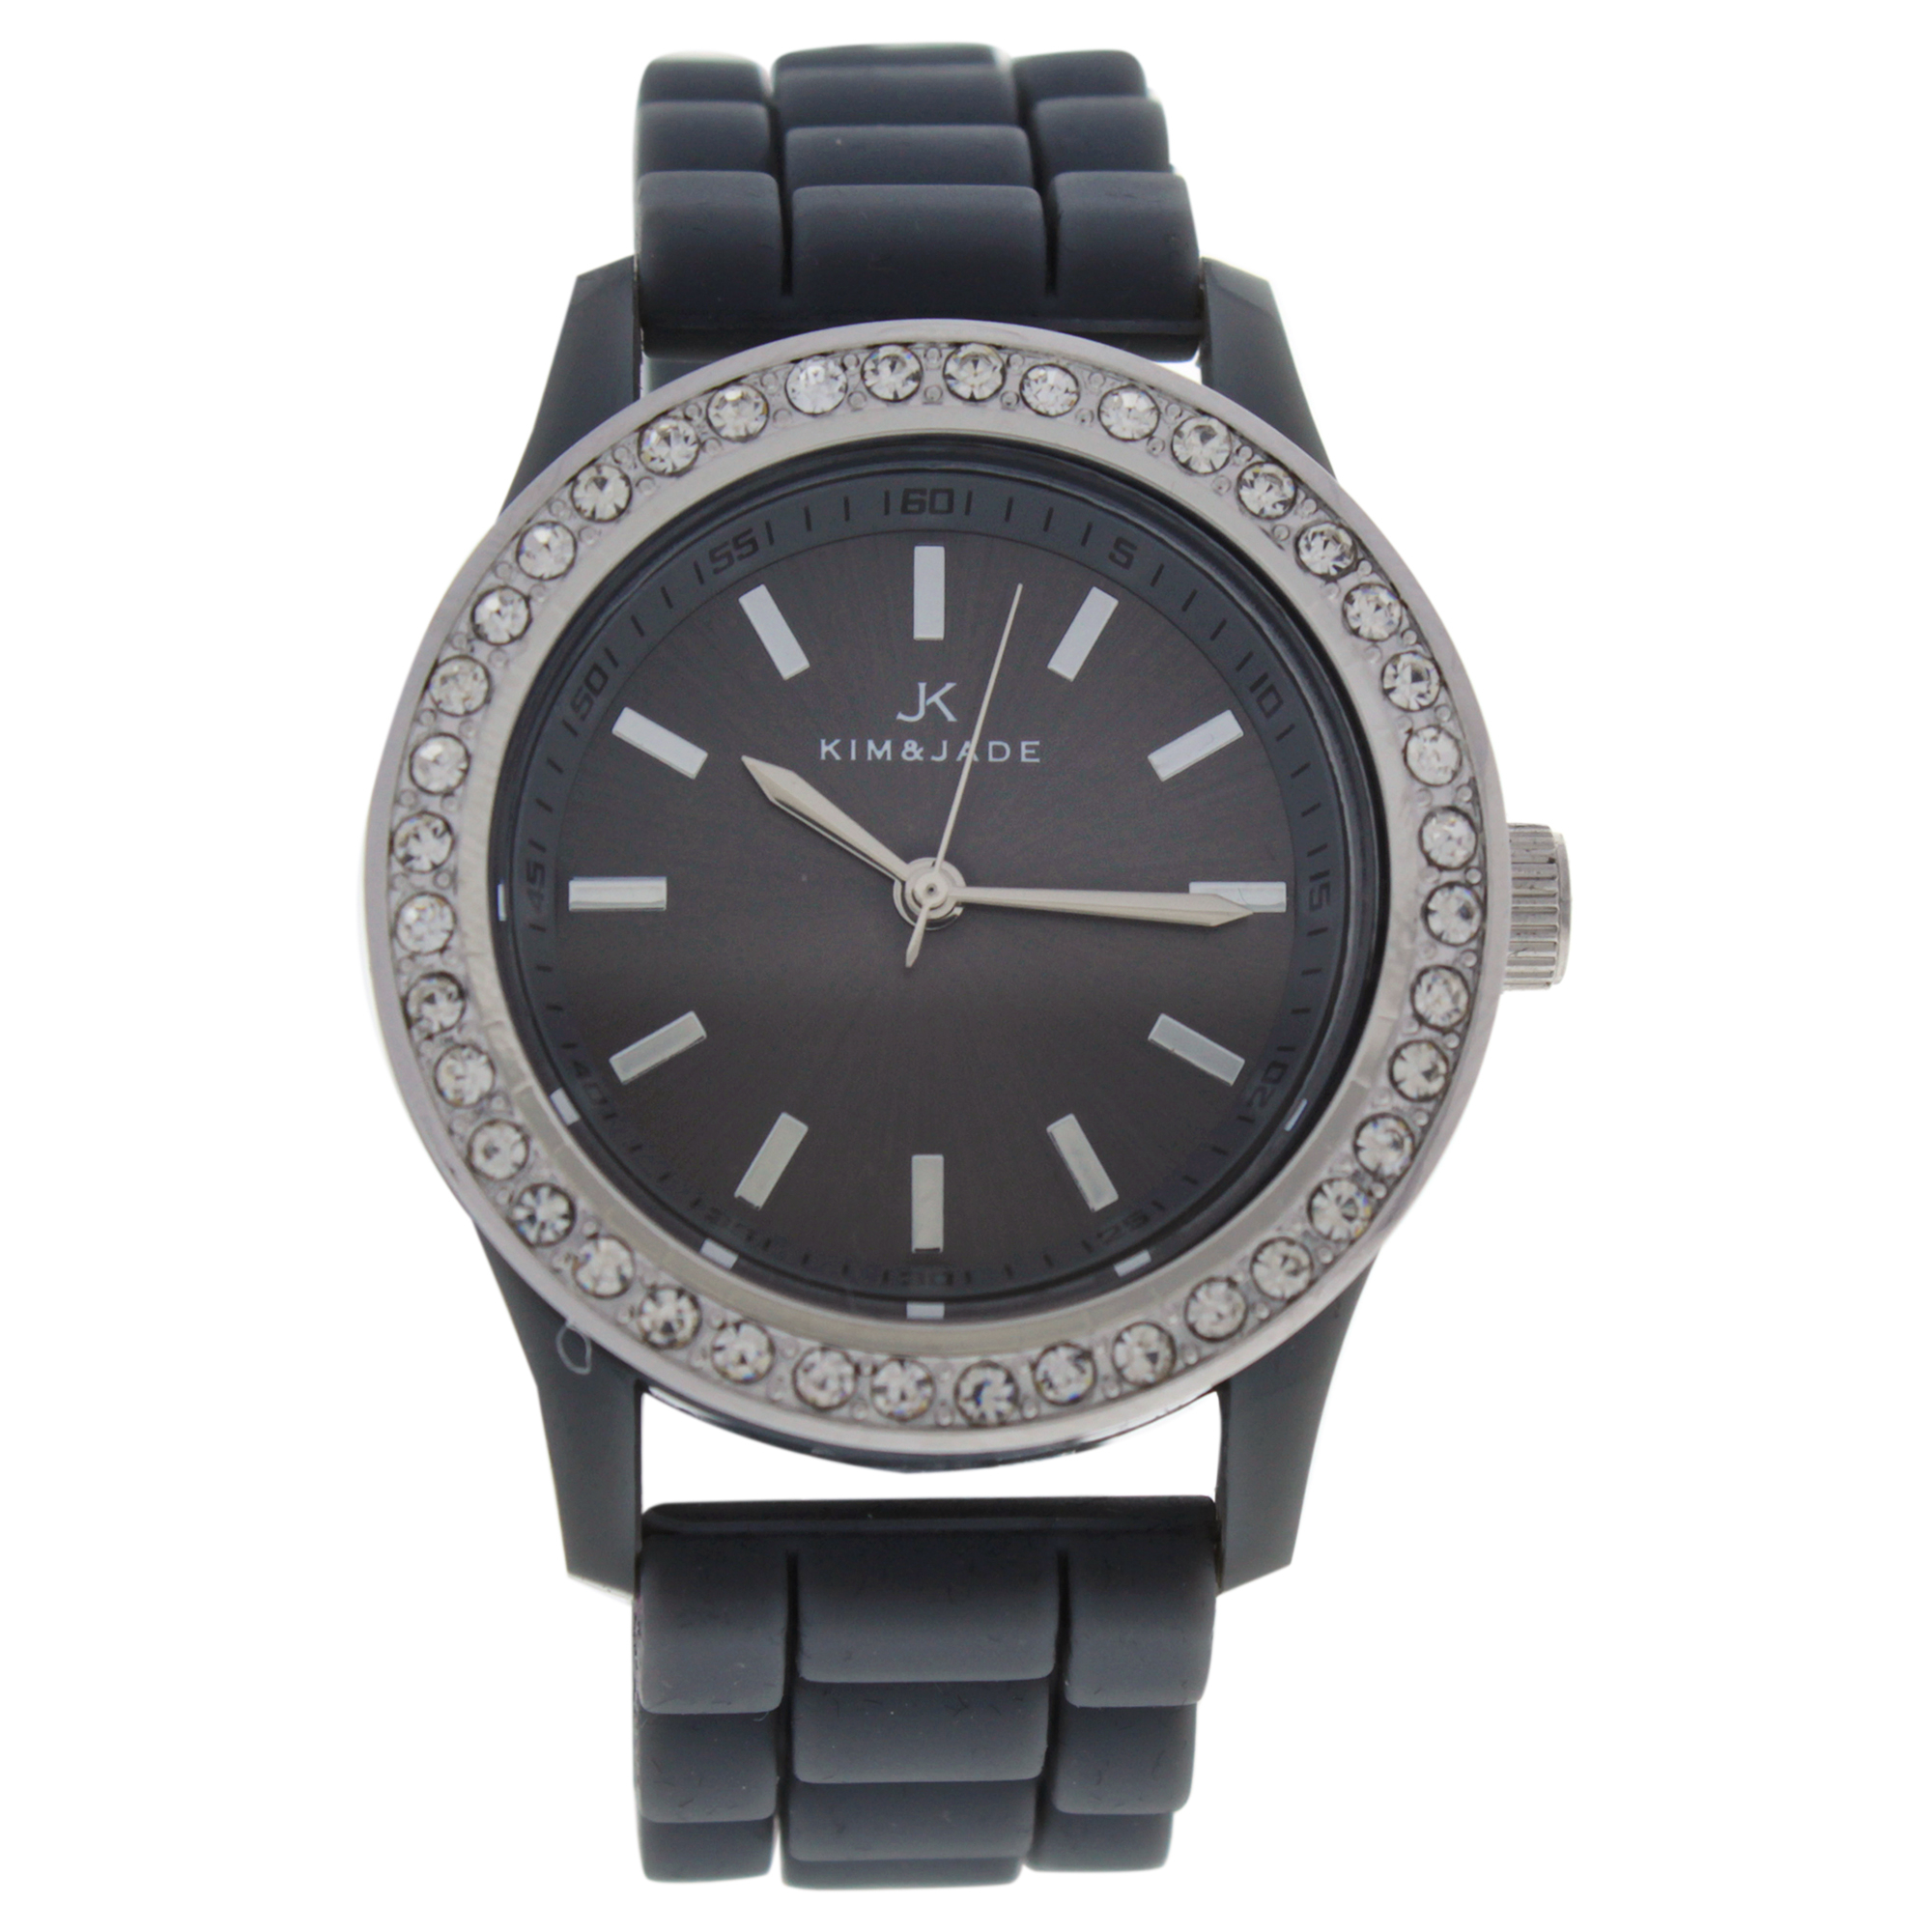 2032L-G Grey Silicone Strap Watch by Kim & Jade for Women - 1 Pc Watch